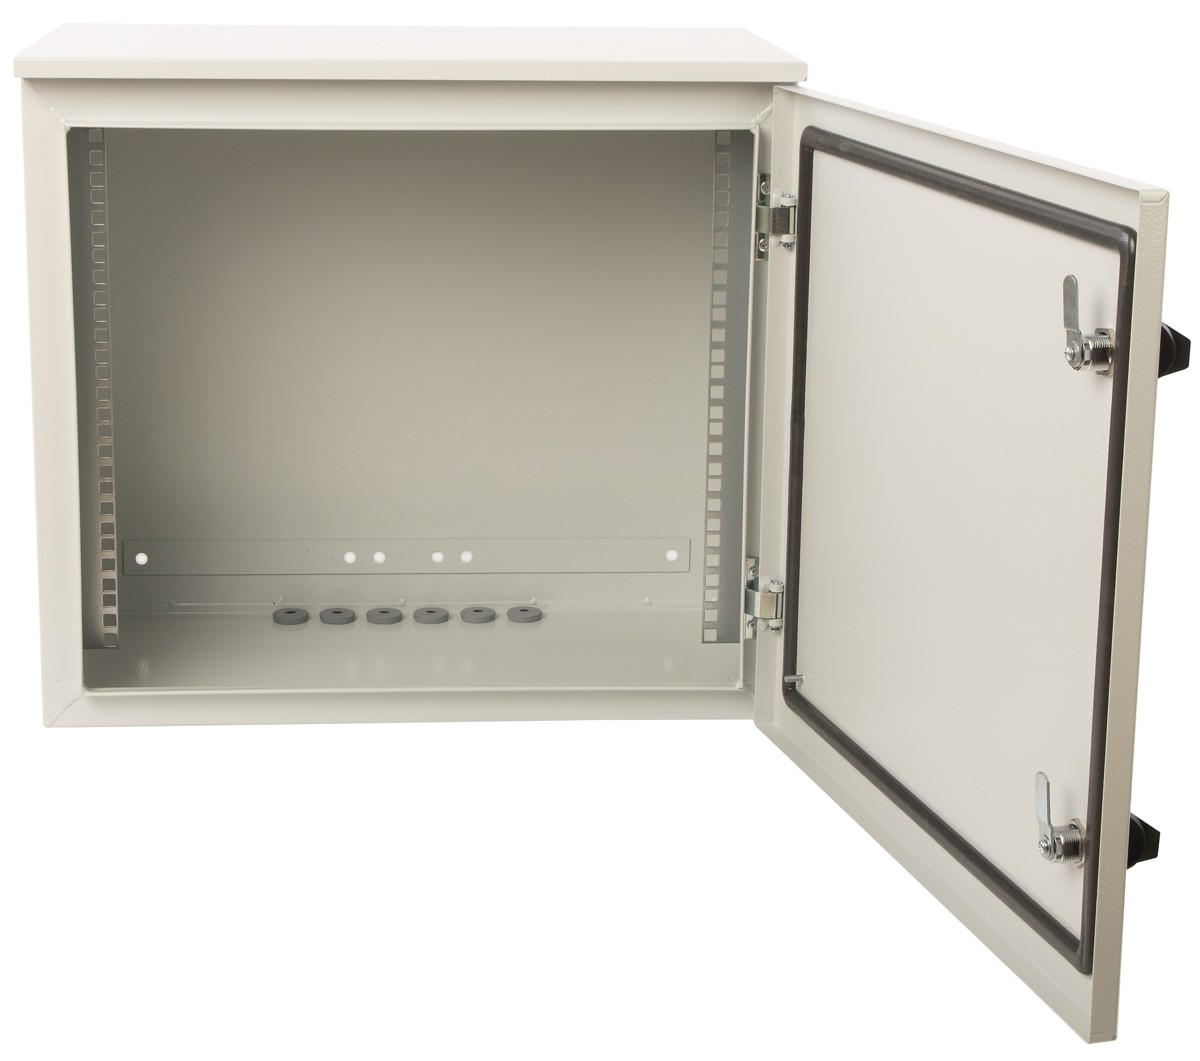 Masterlan outdoor cabinet 19" 9U/410mm, assembled, IP65